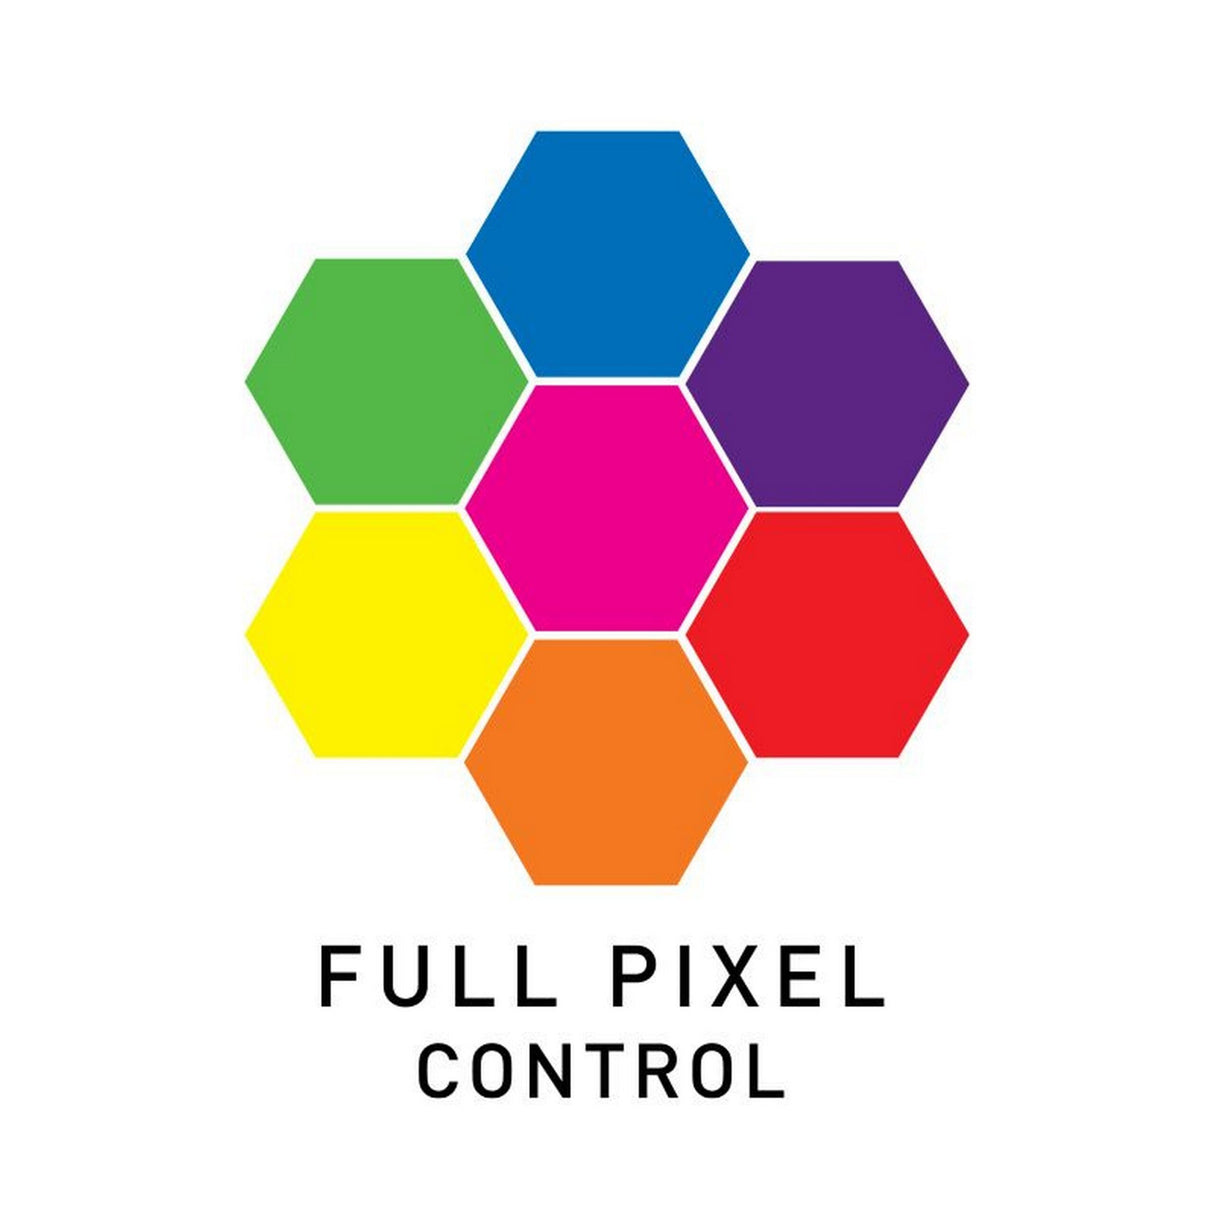 ADJ Focus Flex 40-Watt 4-In-1 RGBW Color Mixing LED Light